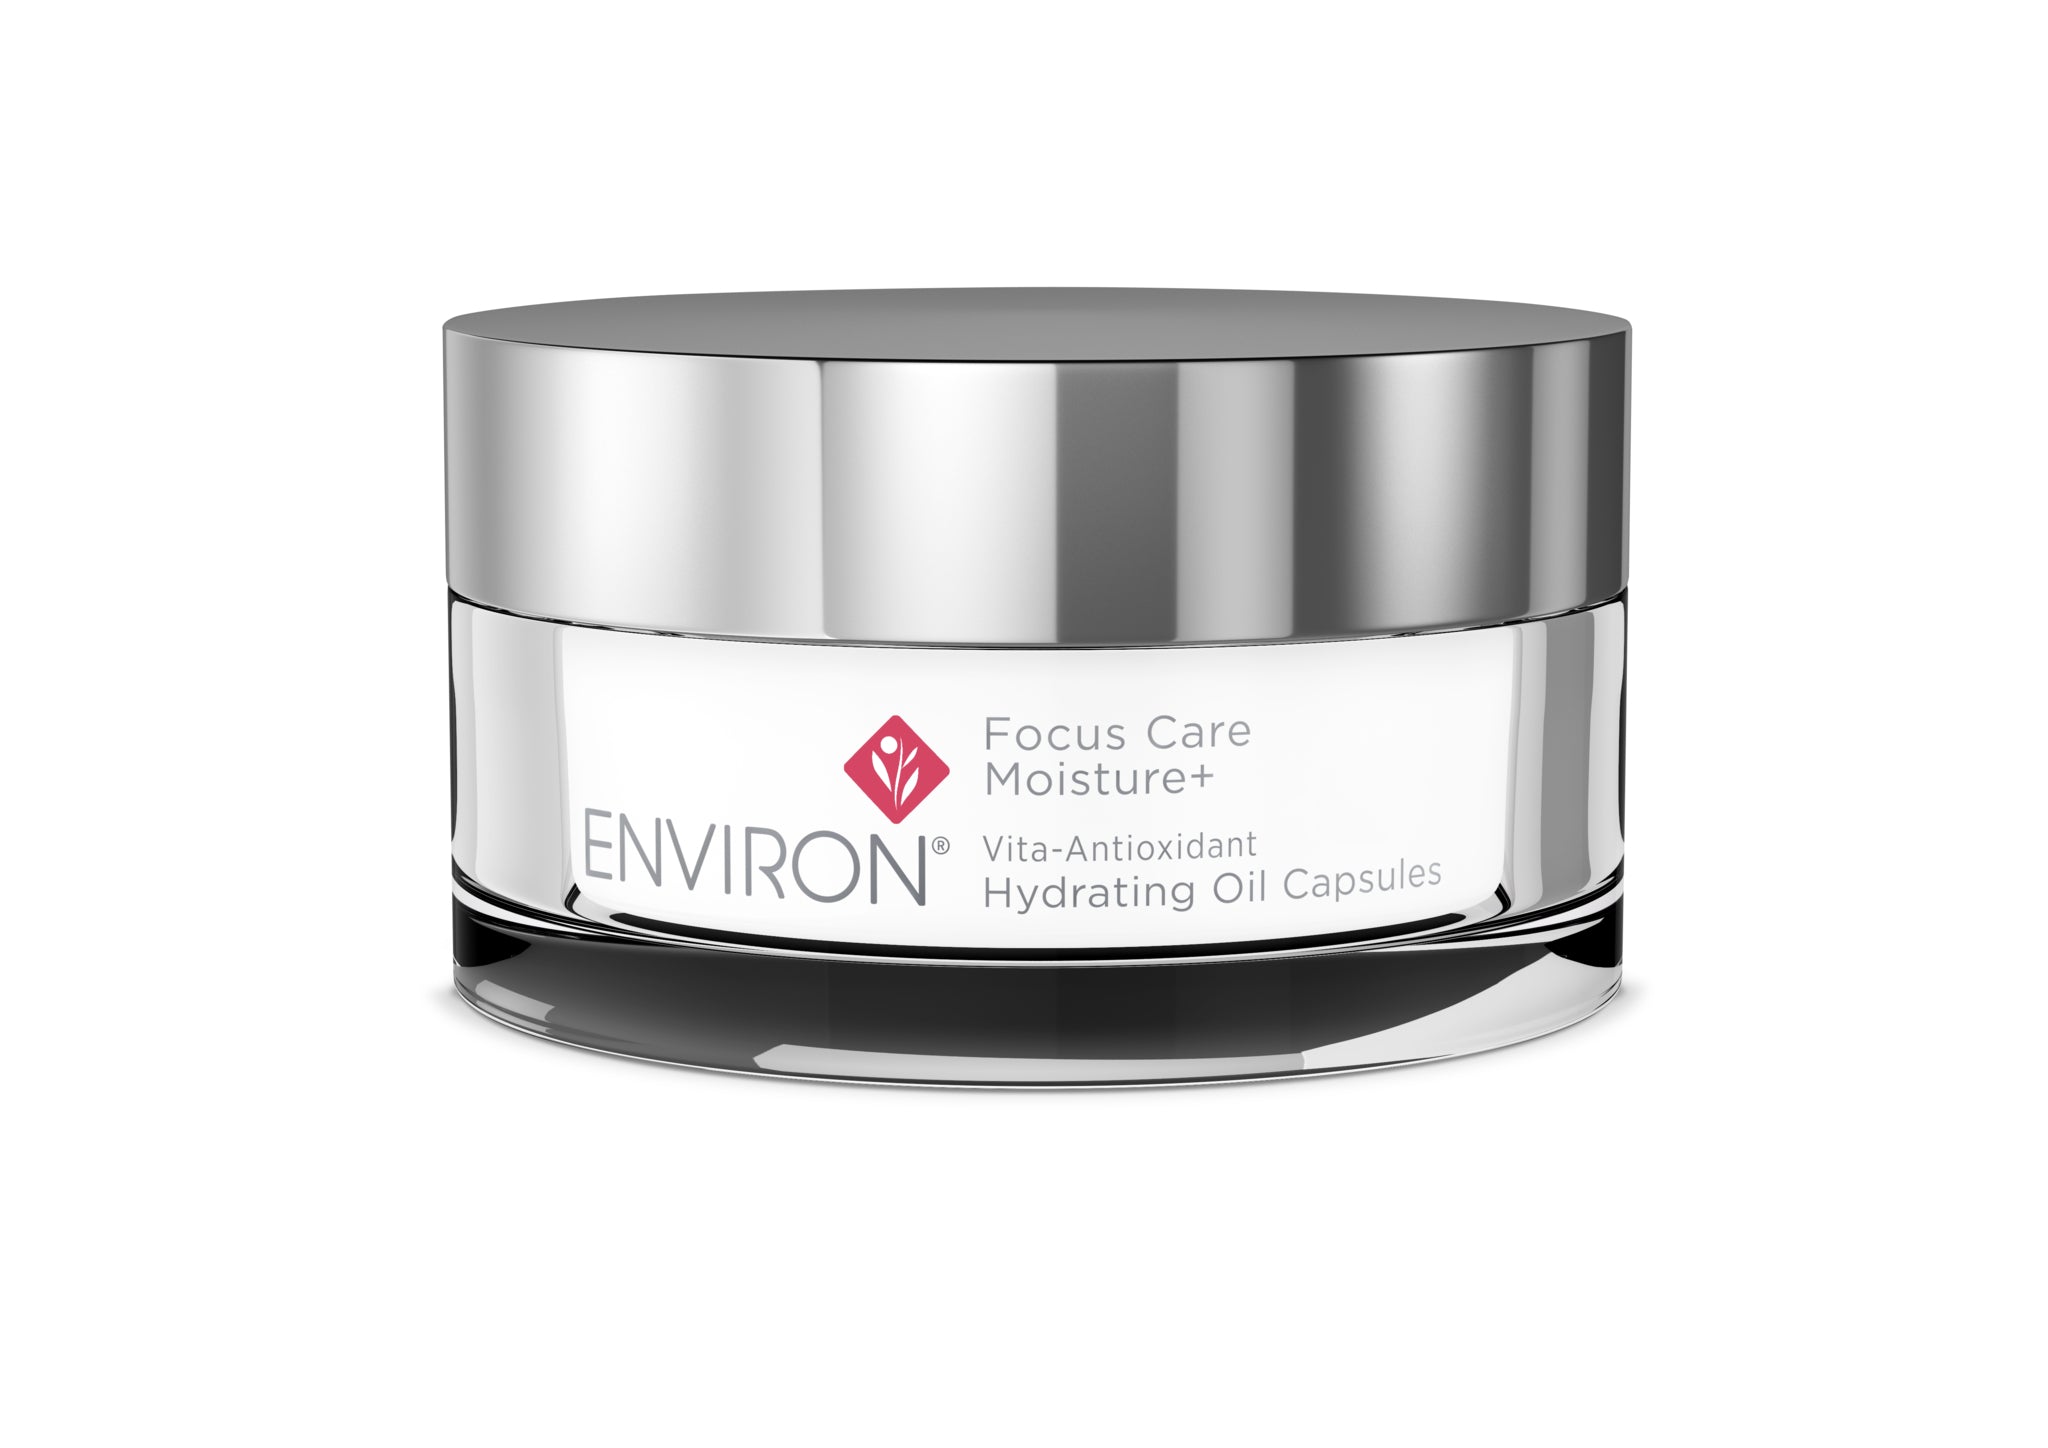 Environ Focus Care™ Moisture+ range Vita-Antioxidant Hydrating Oil Capsules